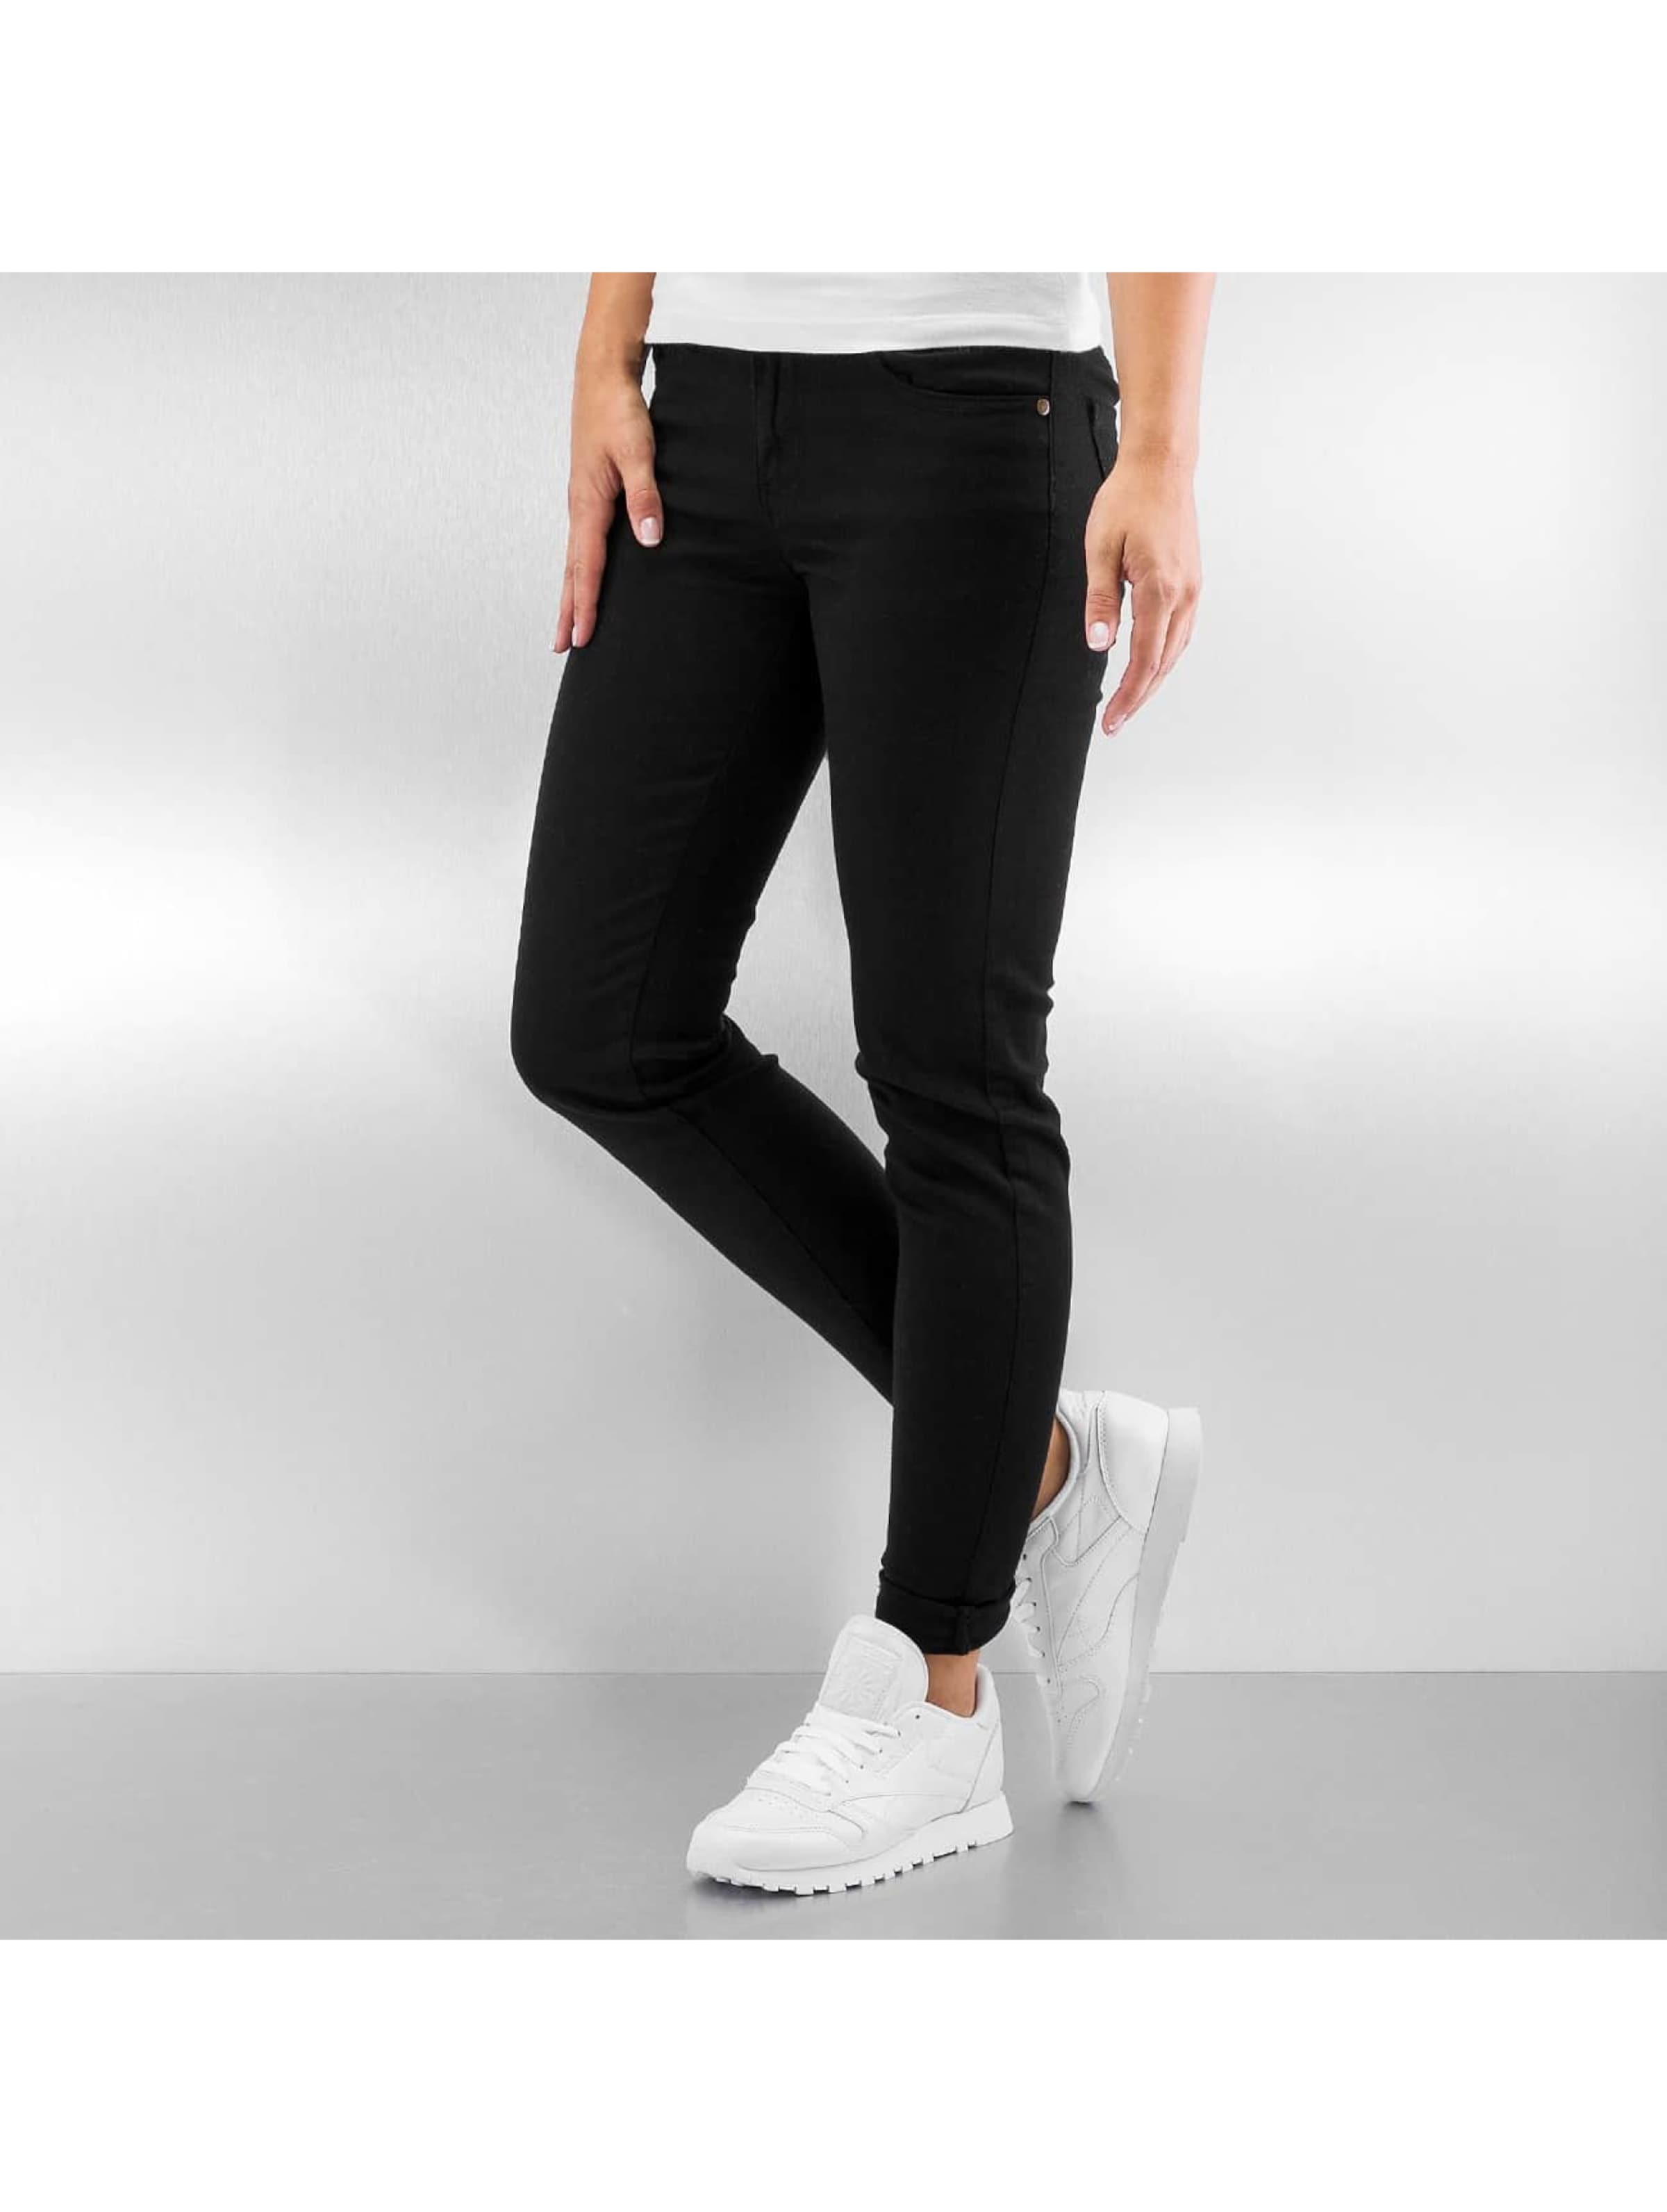 Urban Classics Ladies Skinny Pants Frauen,Unisex op kleur zwart, Maat 30